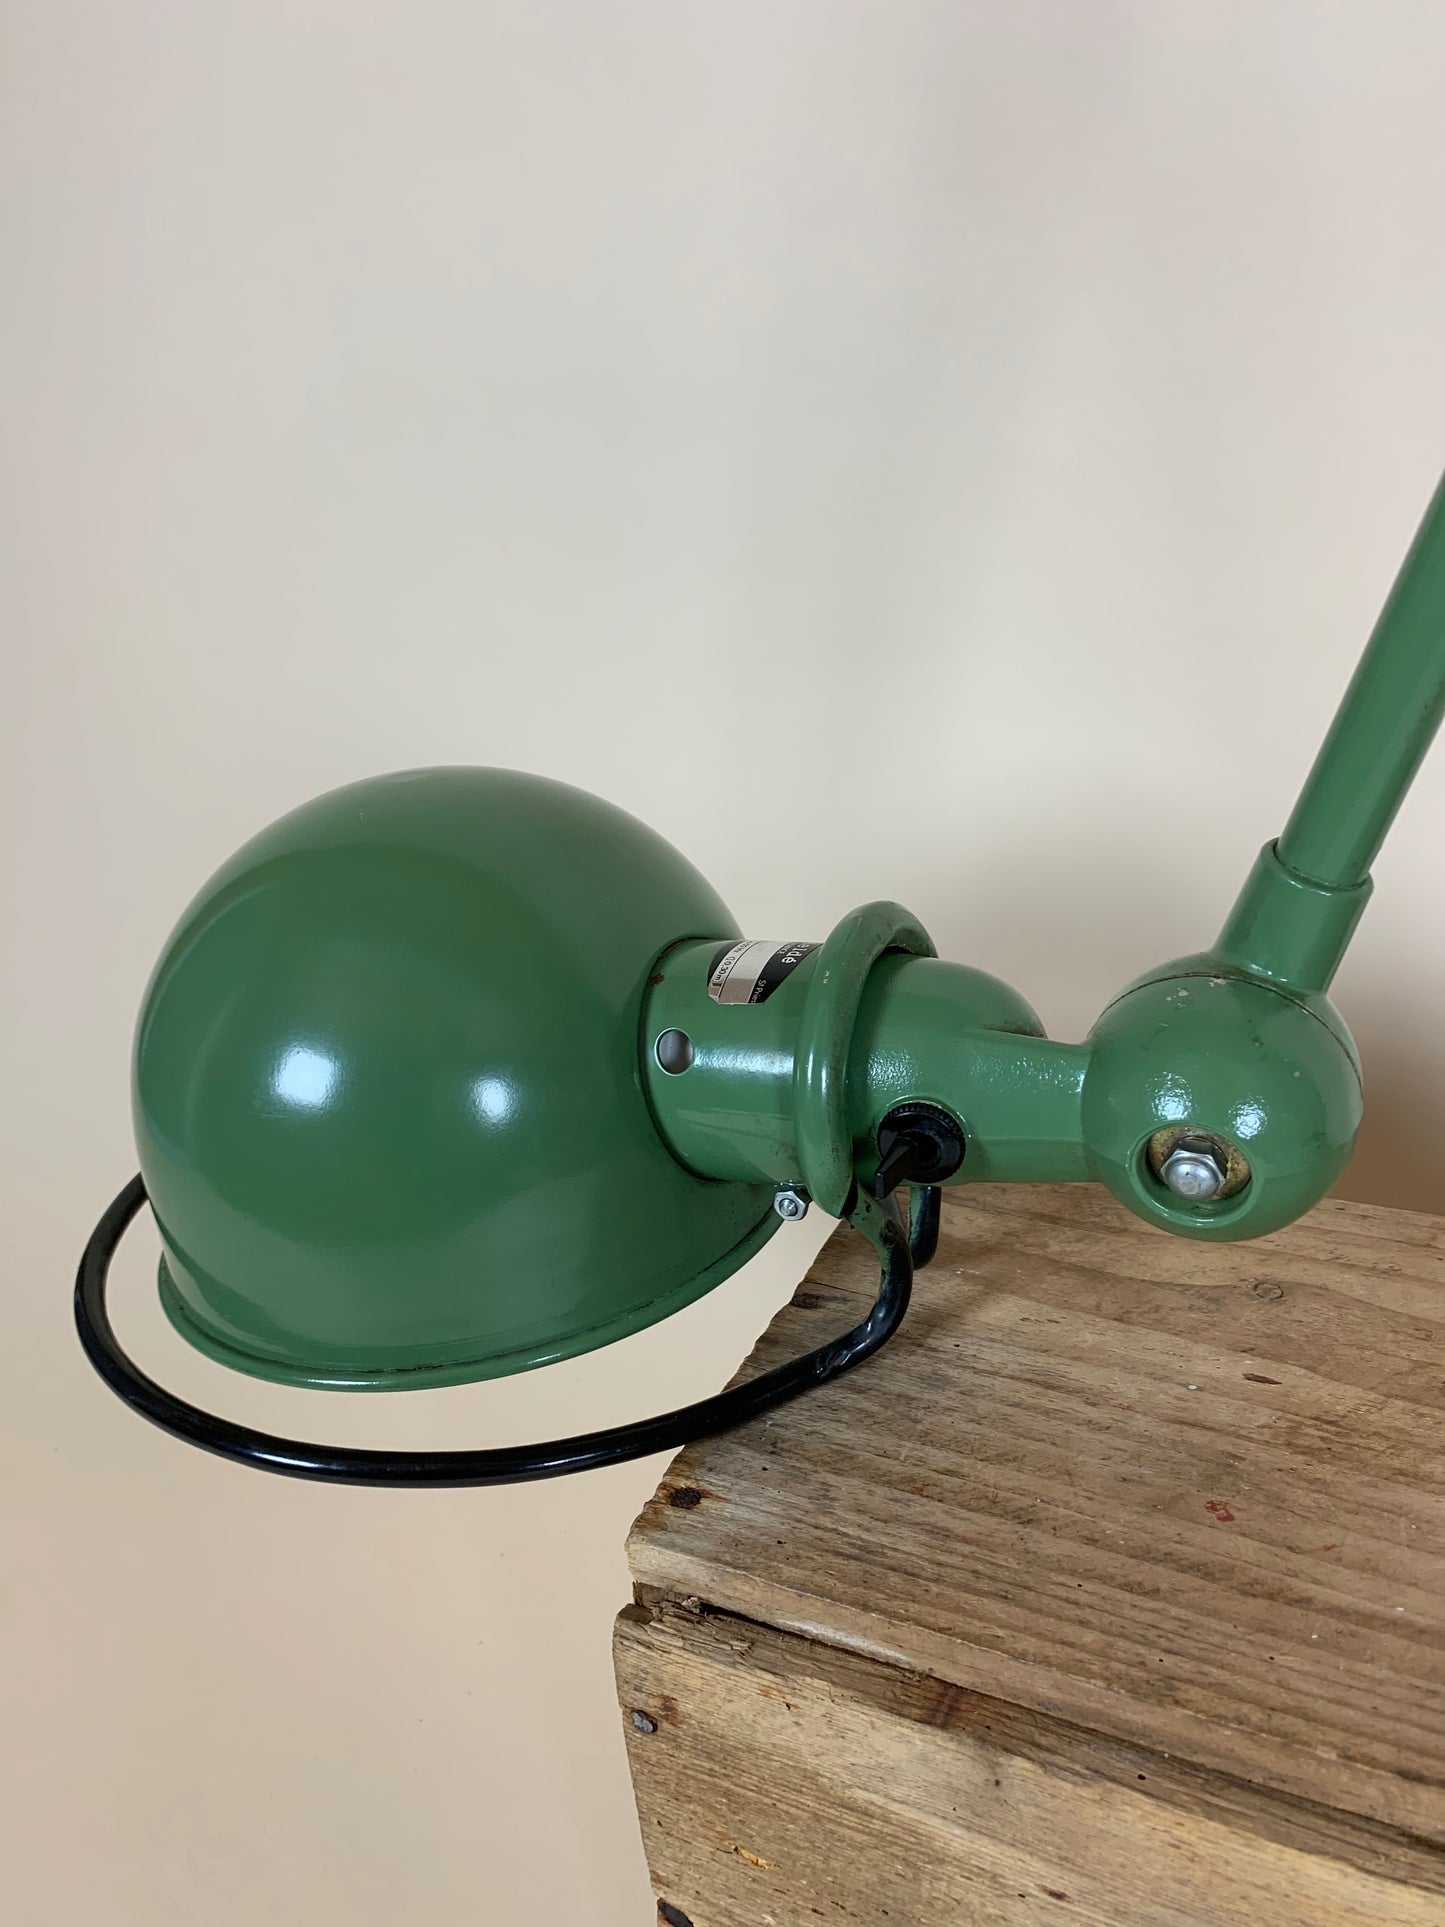 Jieldé væglampe med 2 arme - Grøn